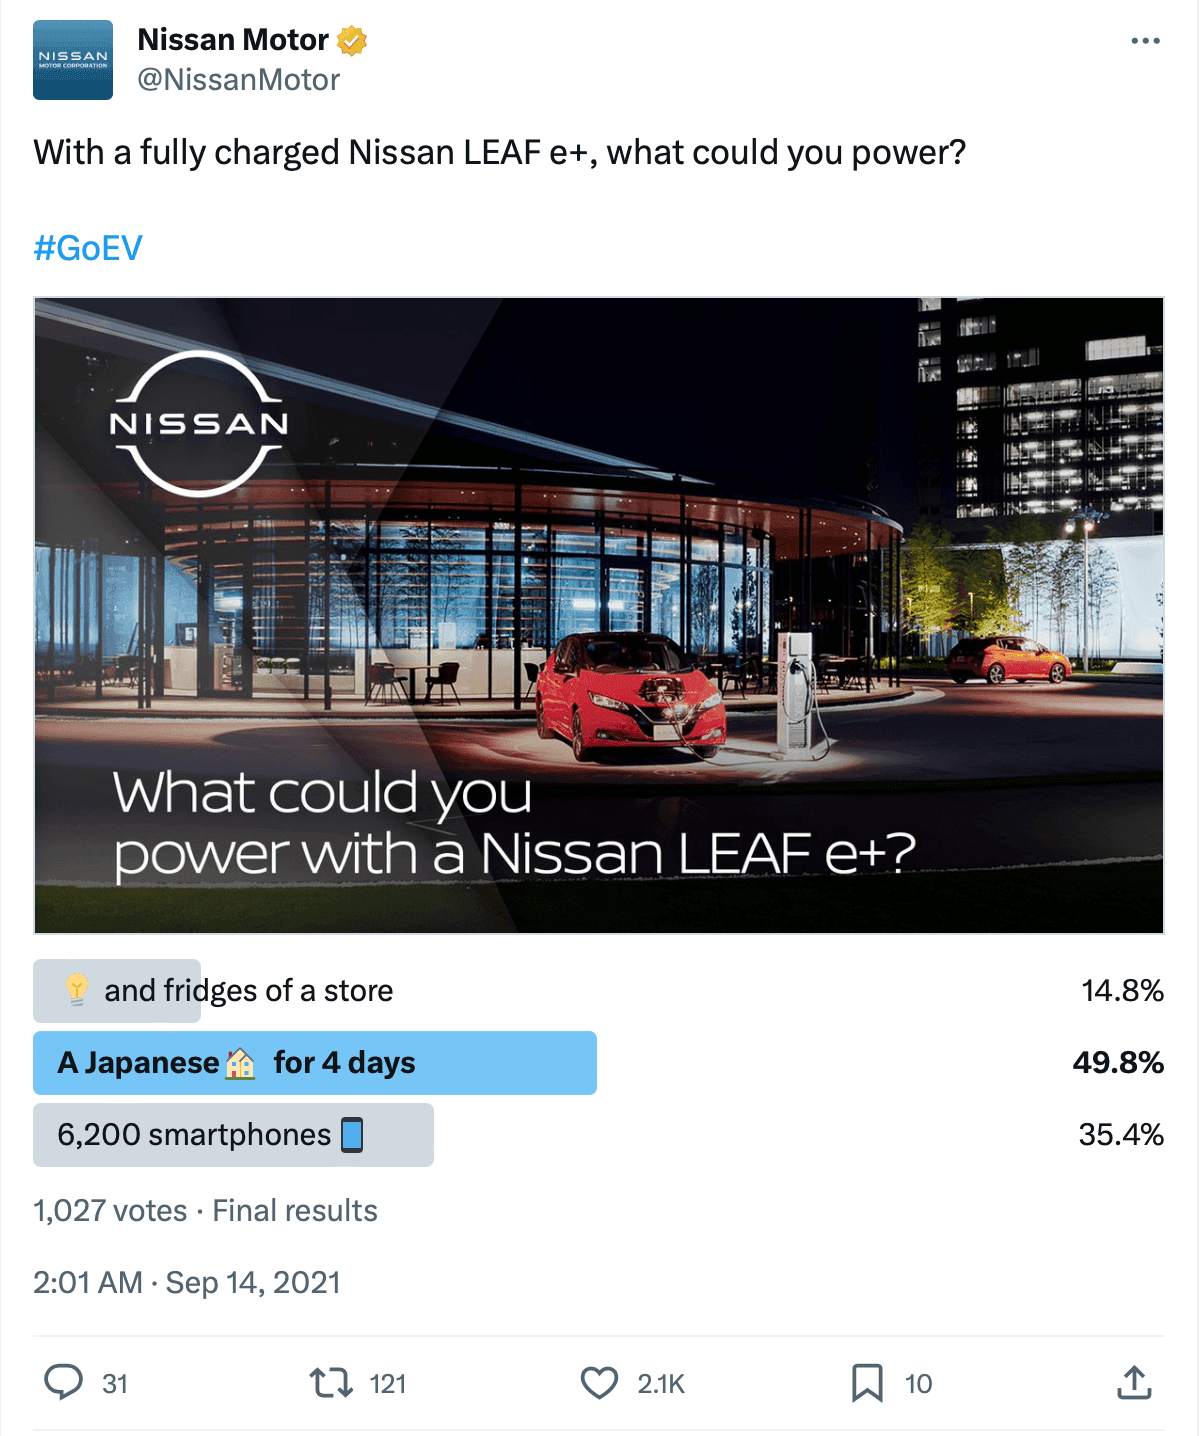 Nissan Motor Twitter poll